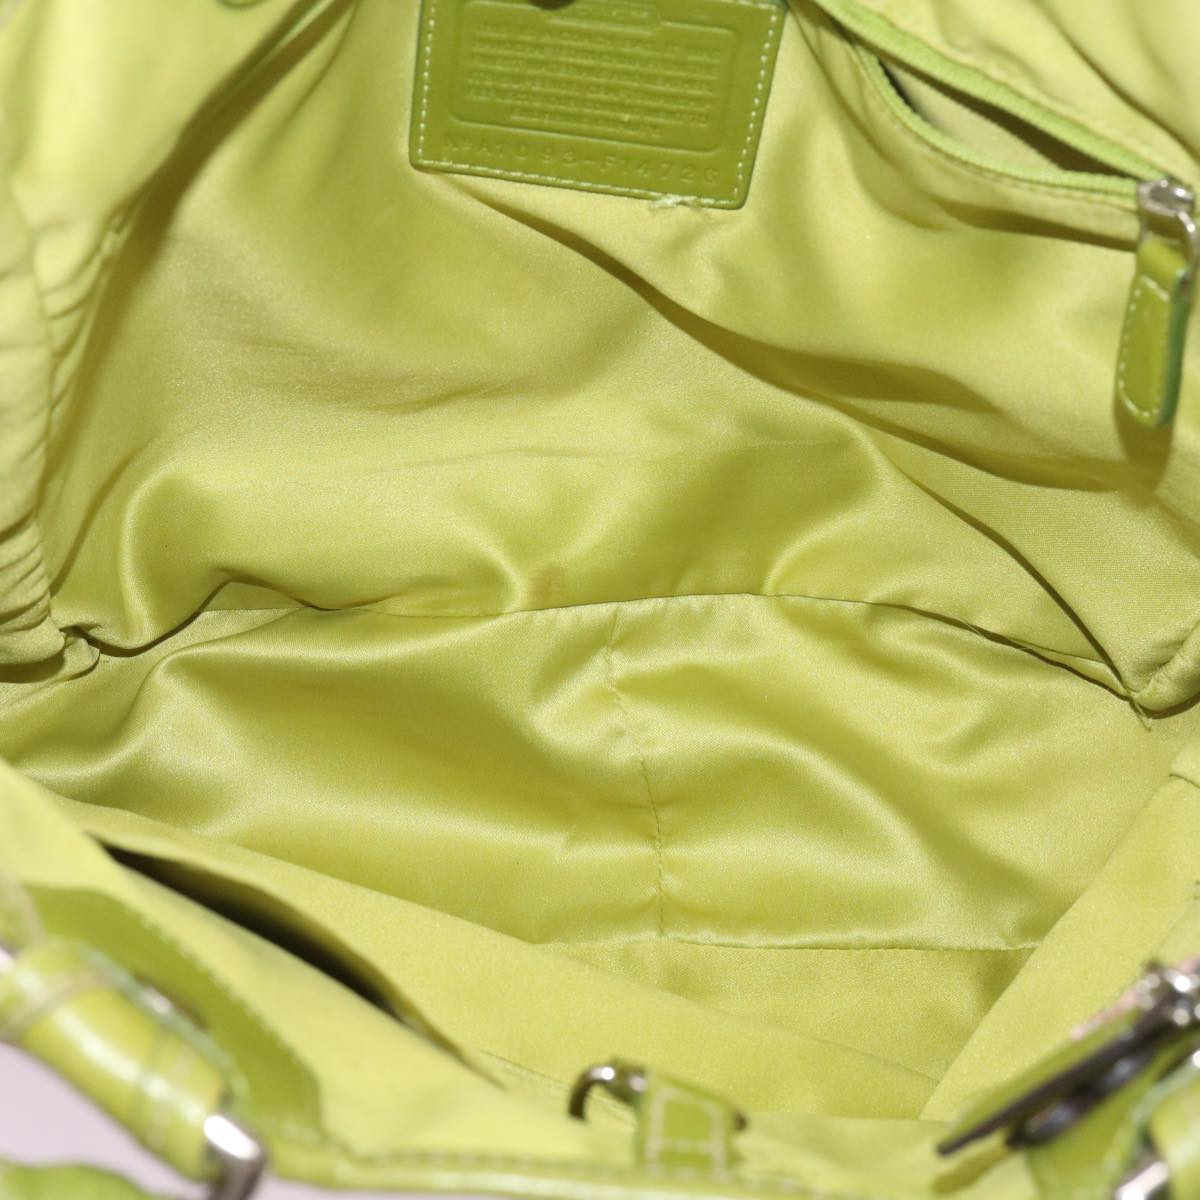 Coach Signature Backpack Shoulder Bag Canvas nylon 4Set Beige Black Auth yk11148